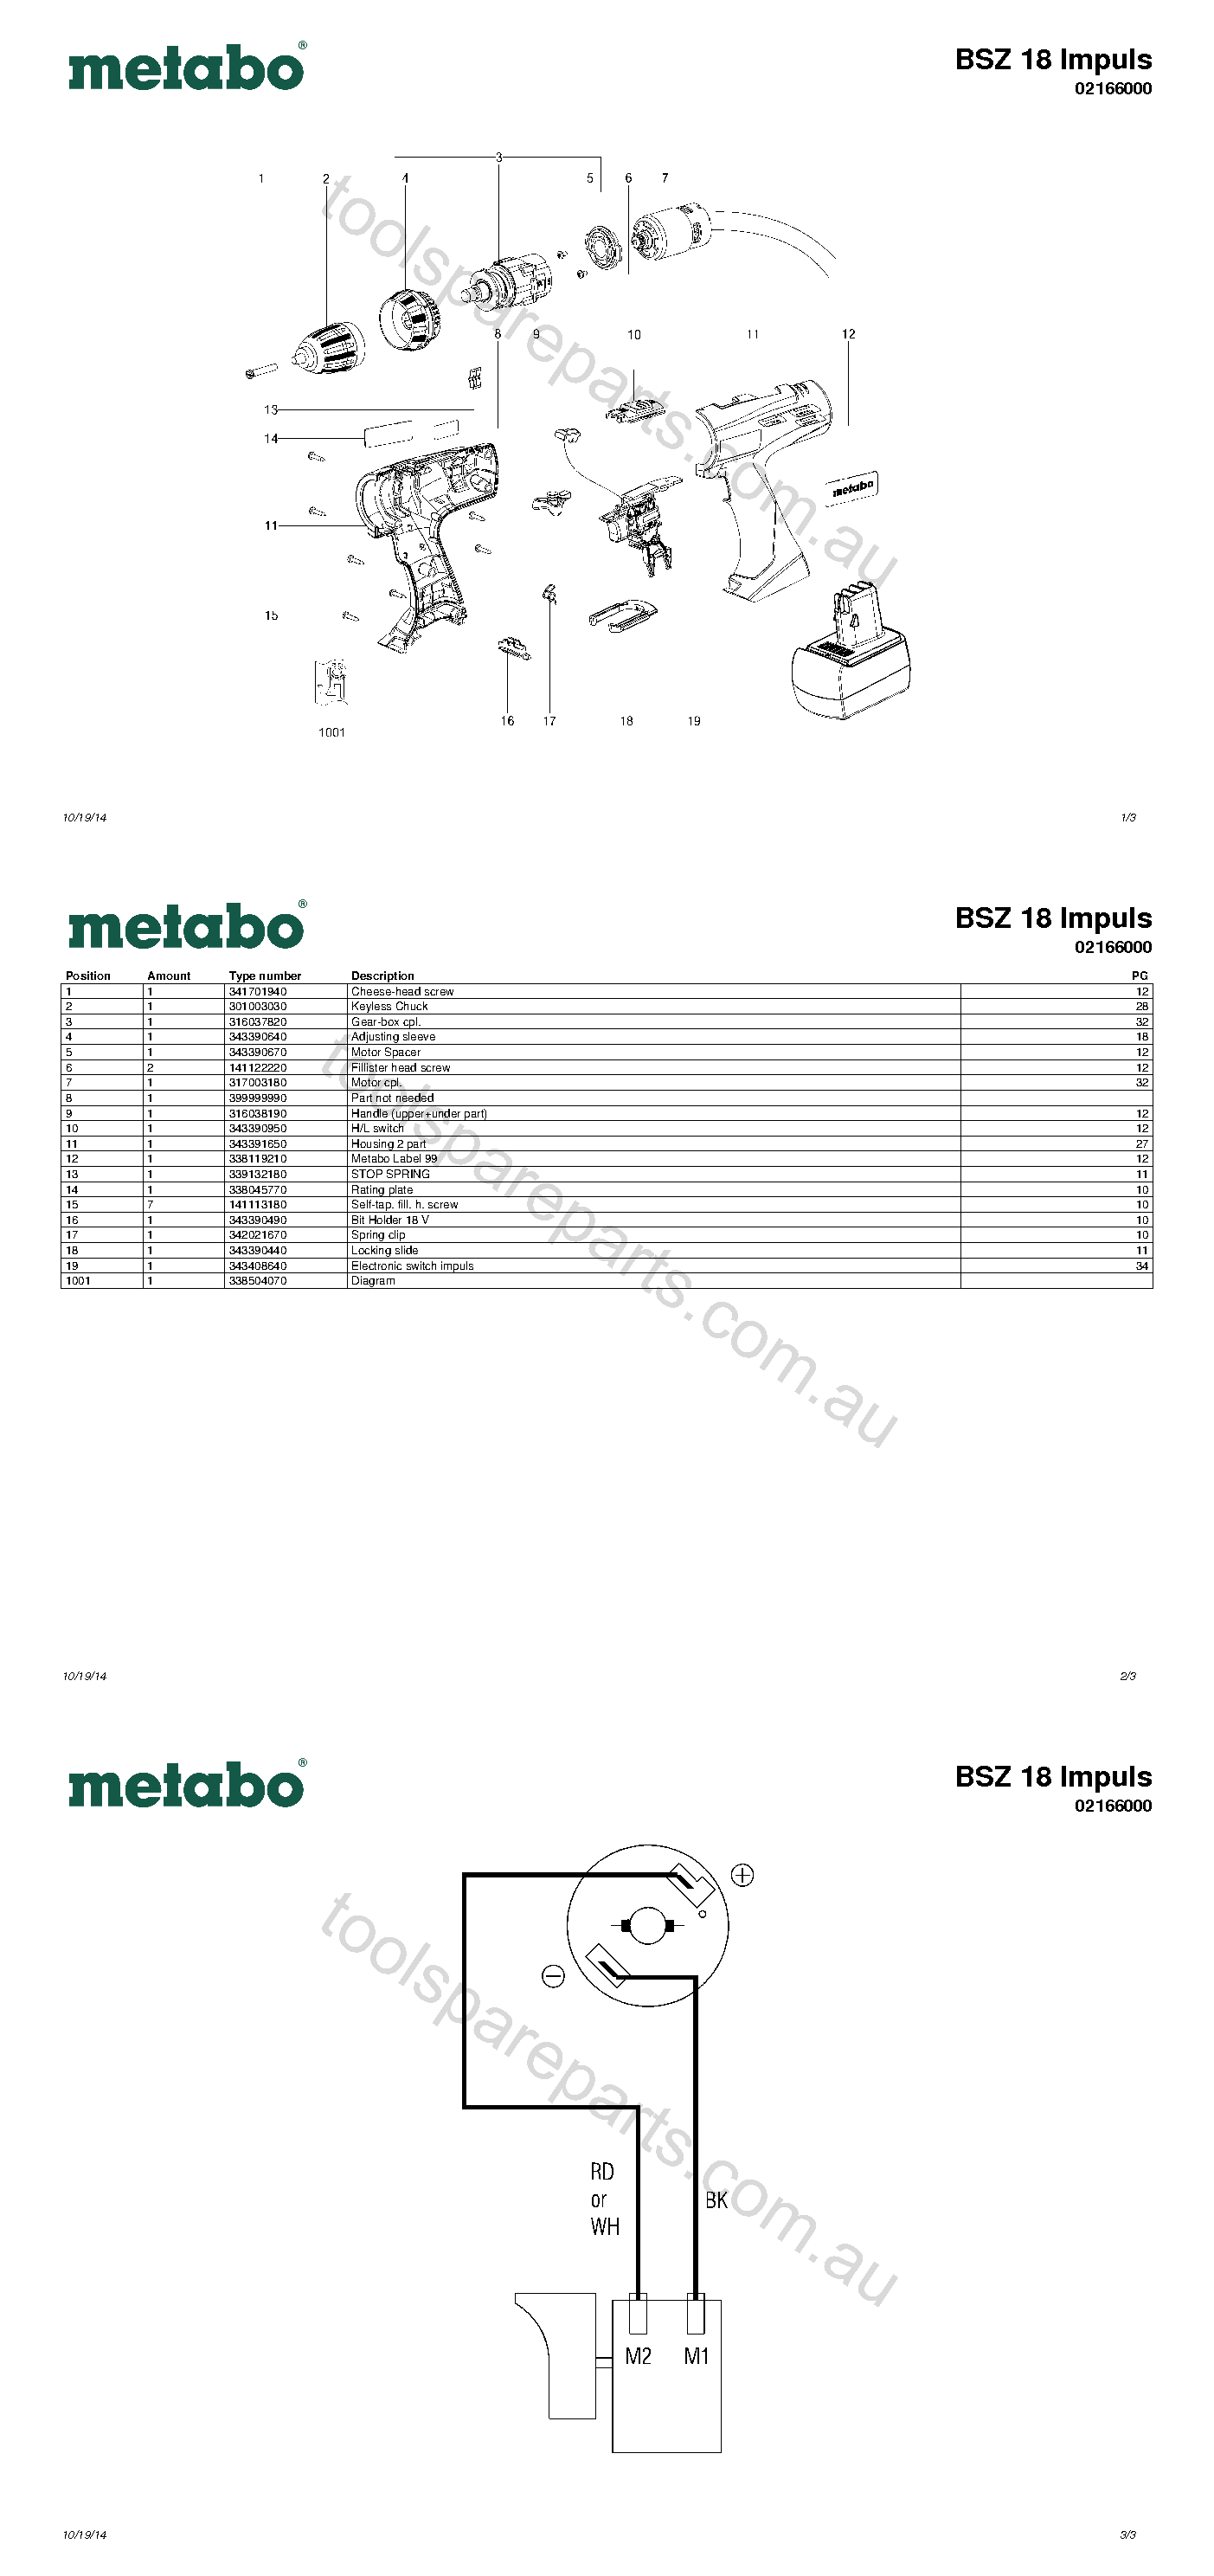 Metabo BSZ 18 Impuls 02166000  Diagram 1